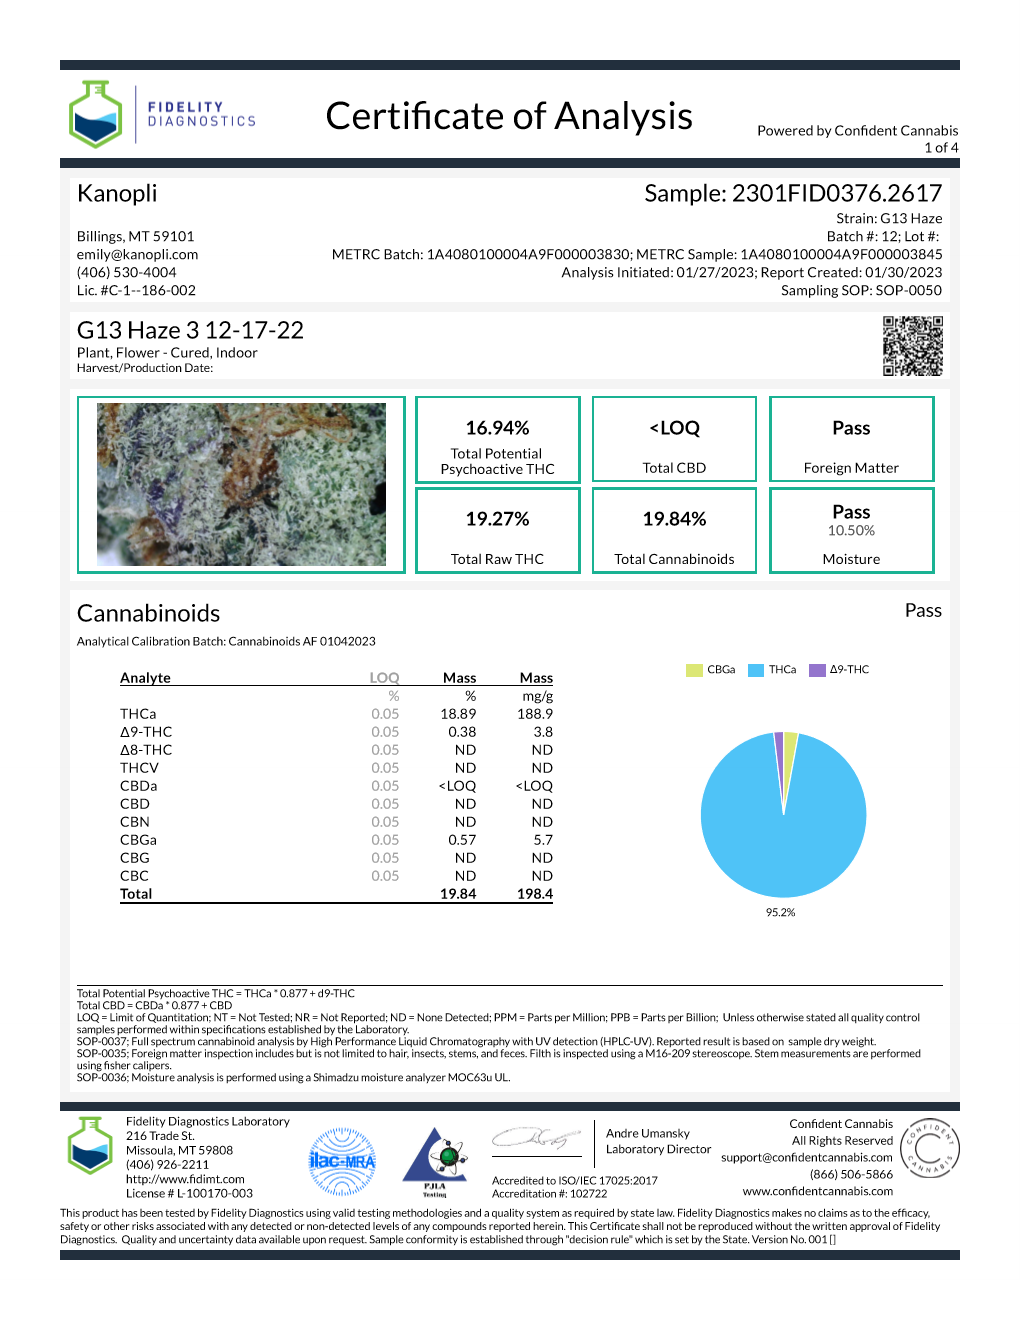 1/4 oz. G13 Haze 3 - Hybrid bud (16.94% THC) Dec. 2022 (7 grams)